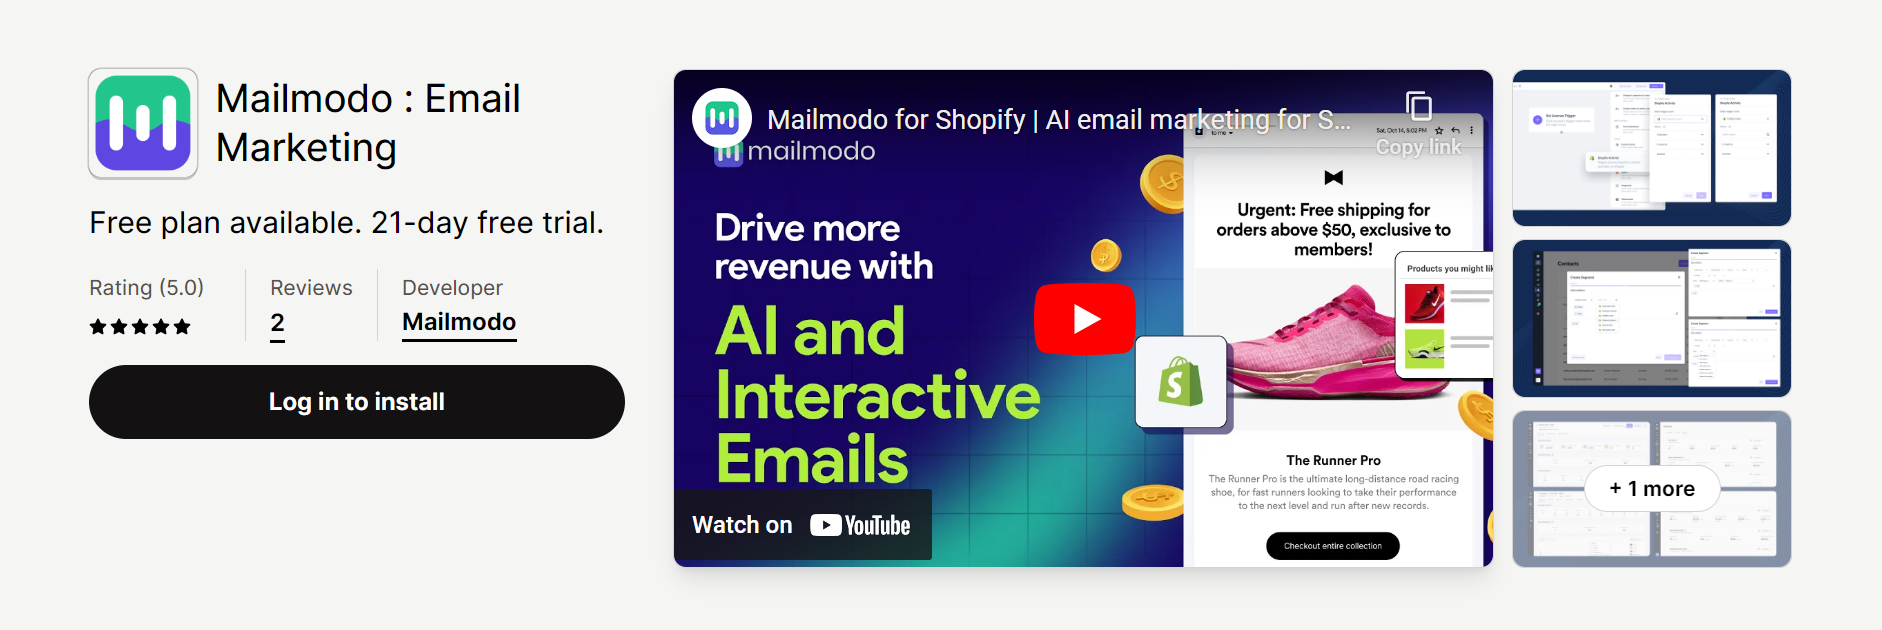 Mailmodo_shopify_app